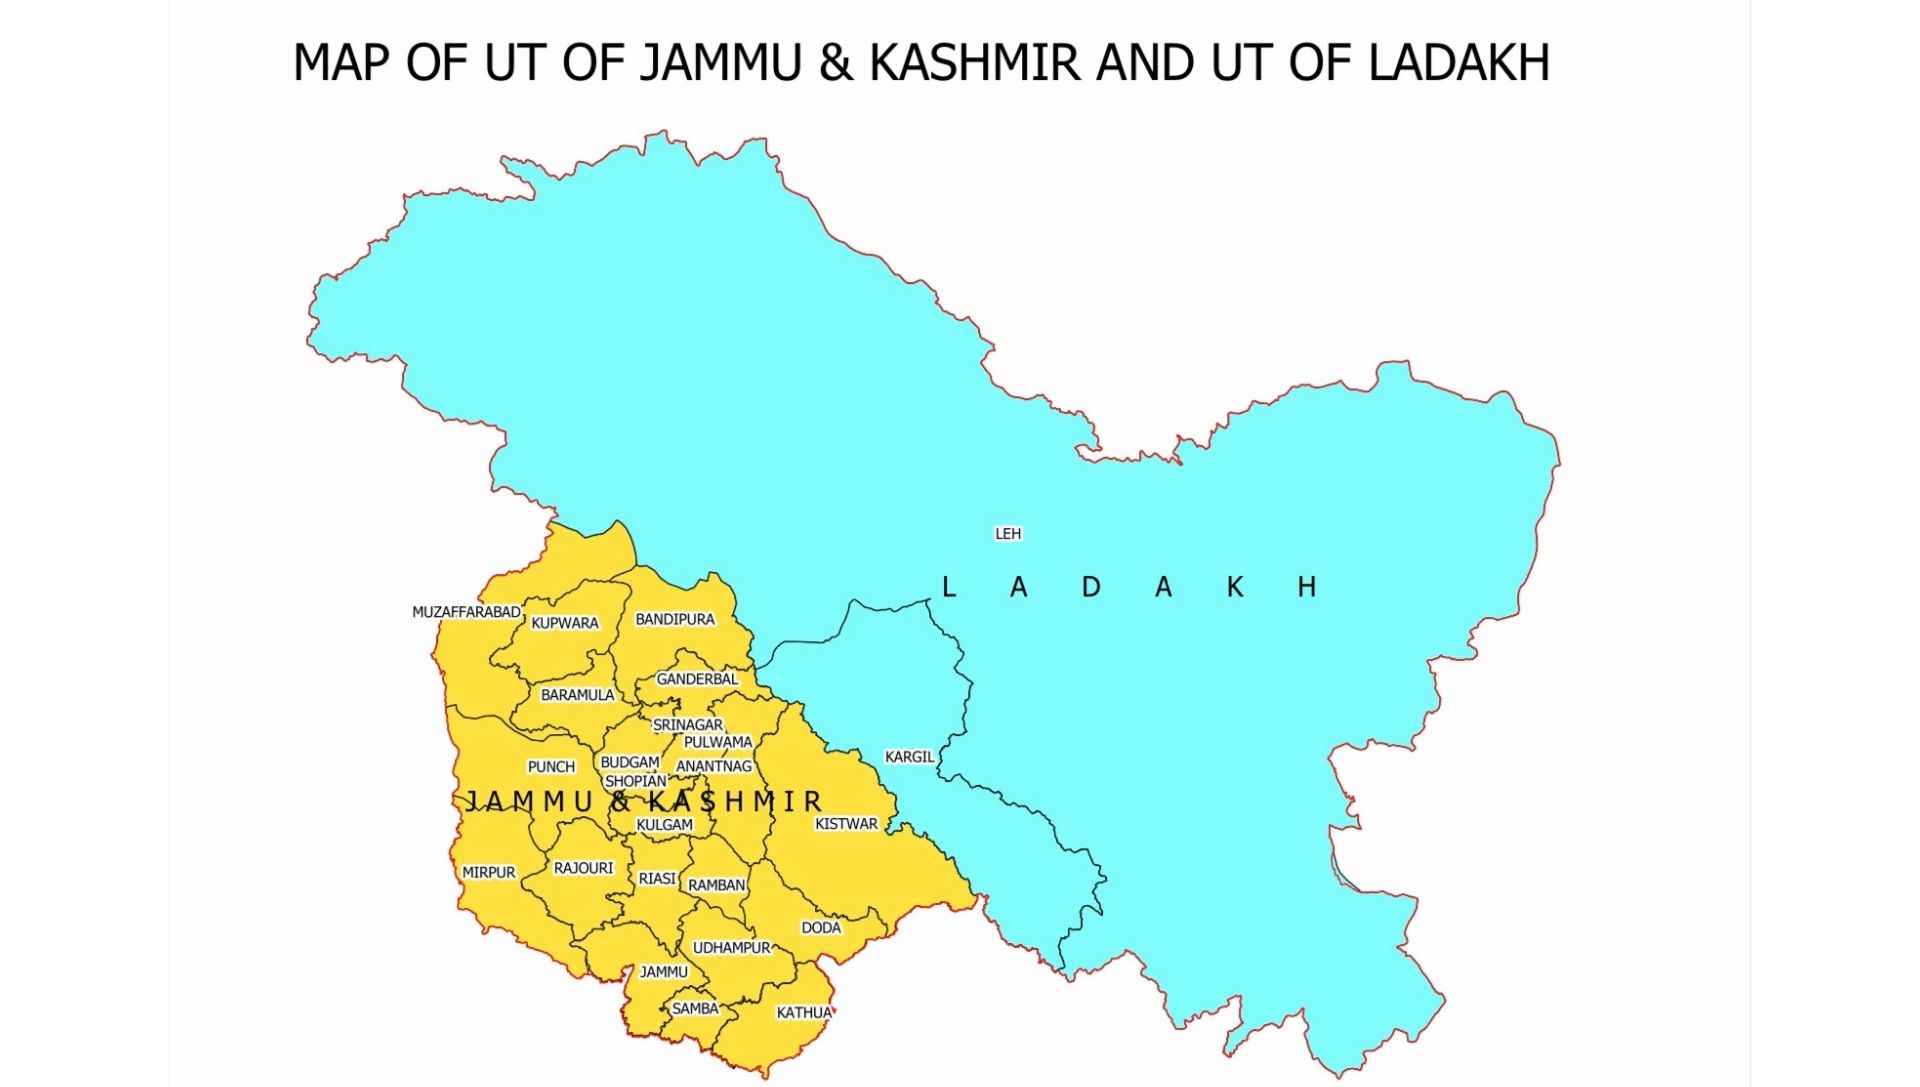 Map of UT of Jammu & Kashmir and UT of Ladakh